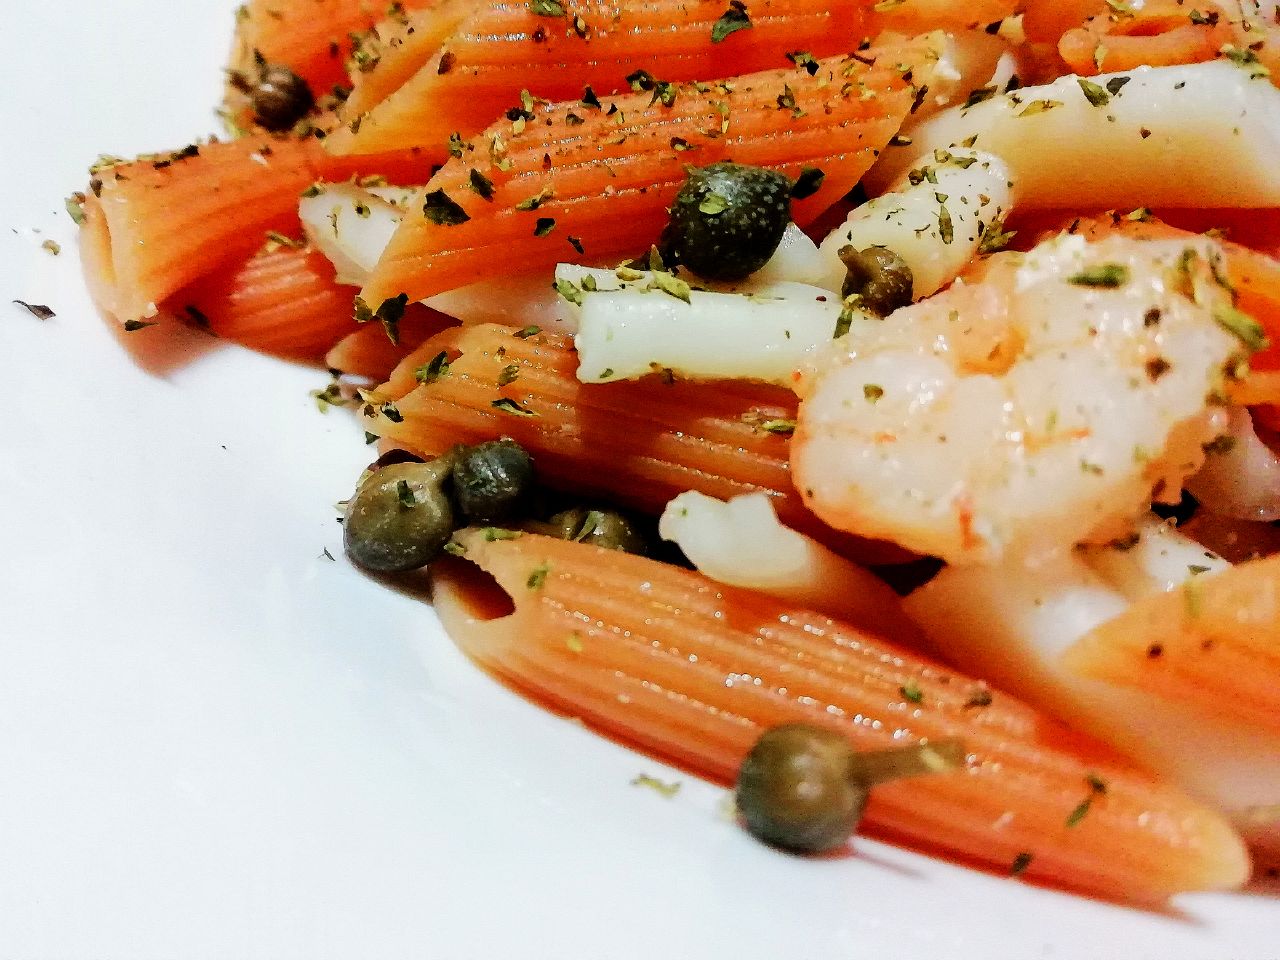 Primi piatti senza glutine: penne di lenticchie rosse con calamaro gamberetti e capperi!